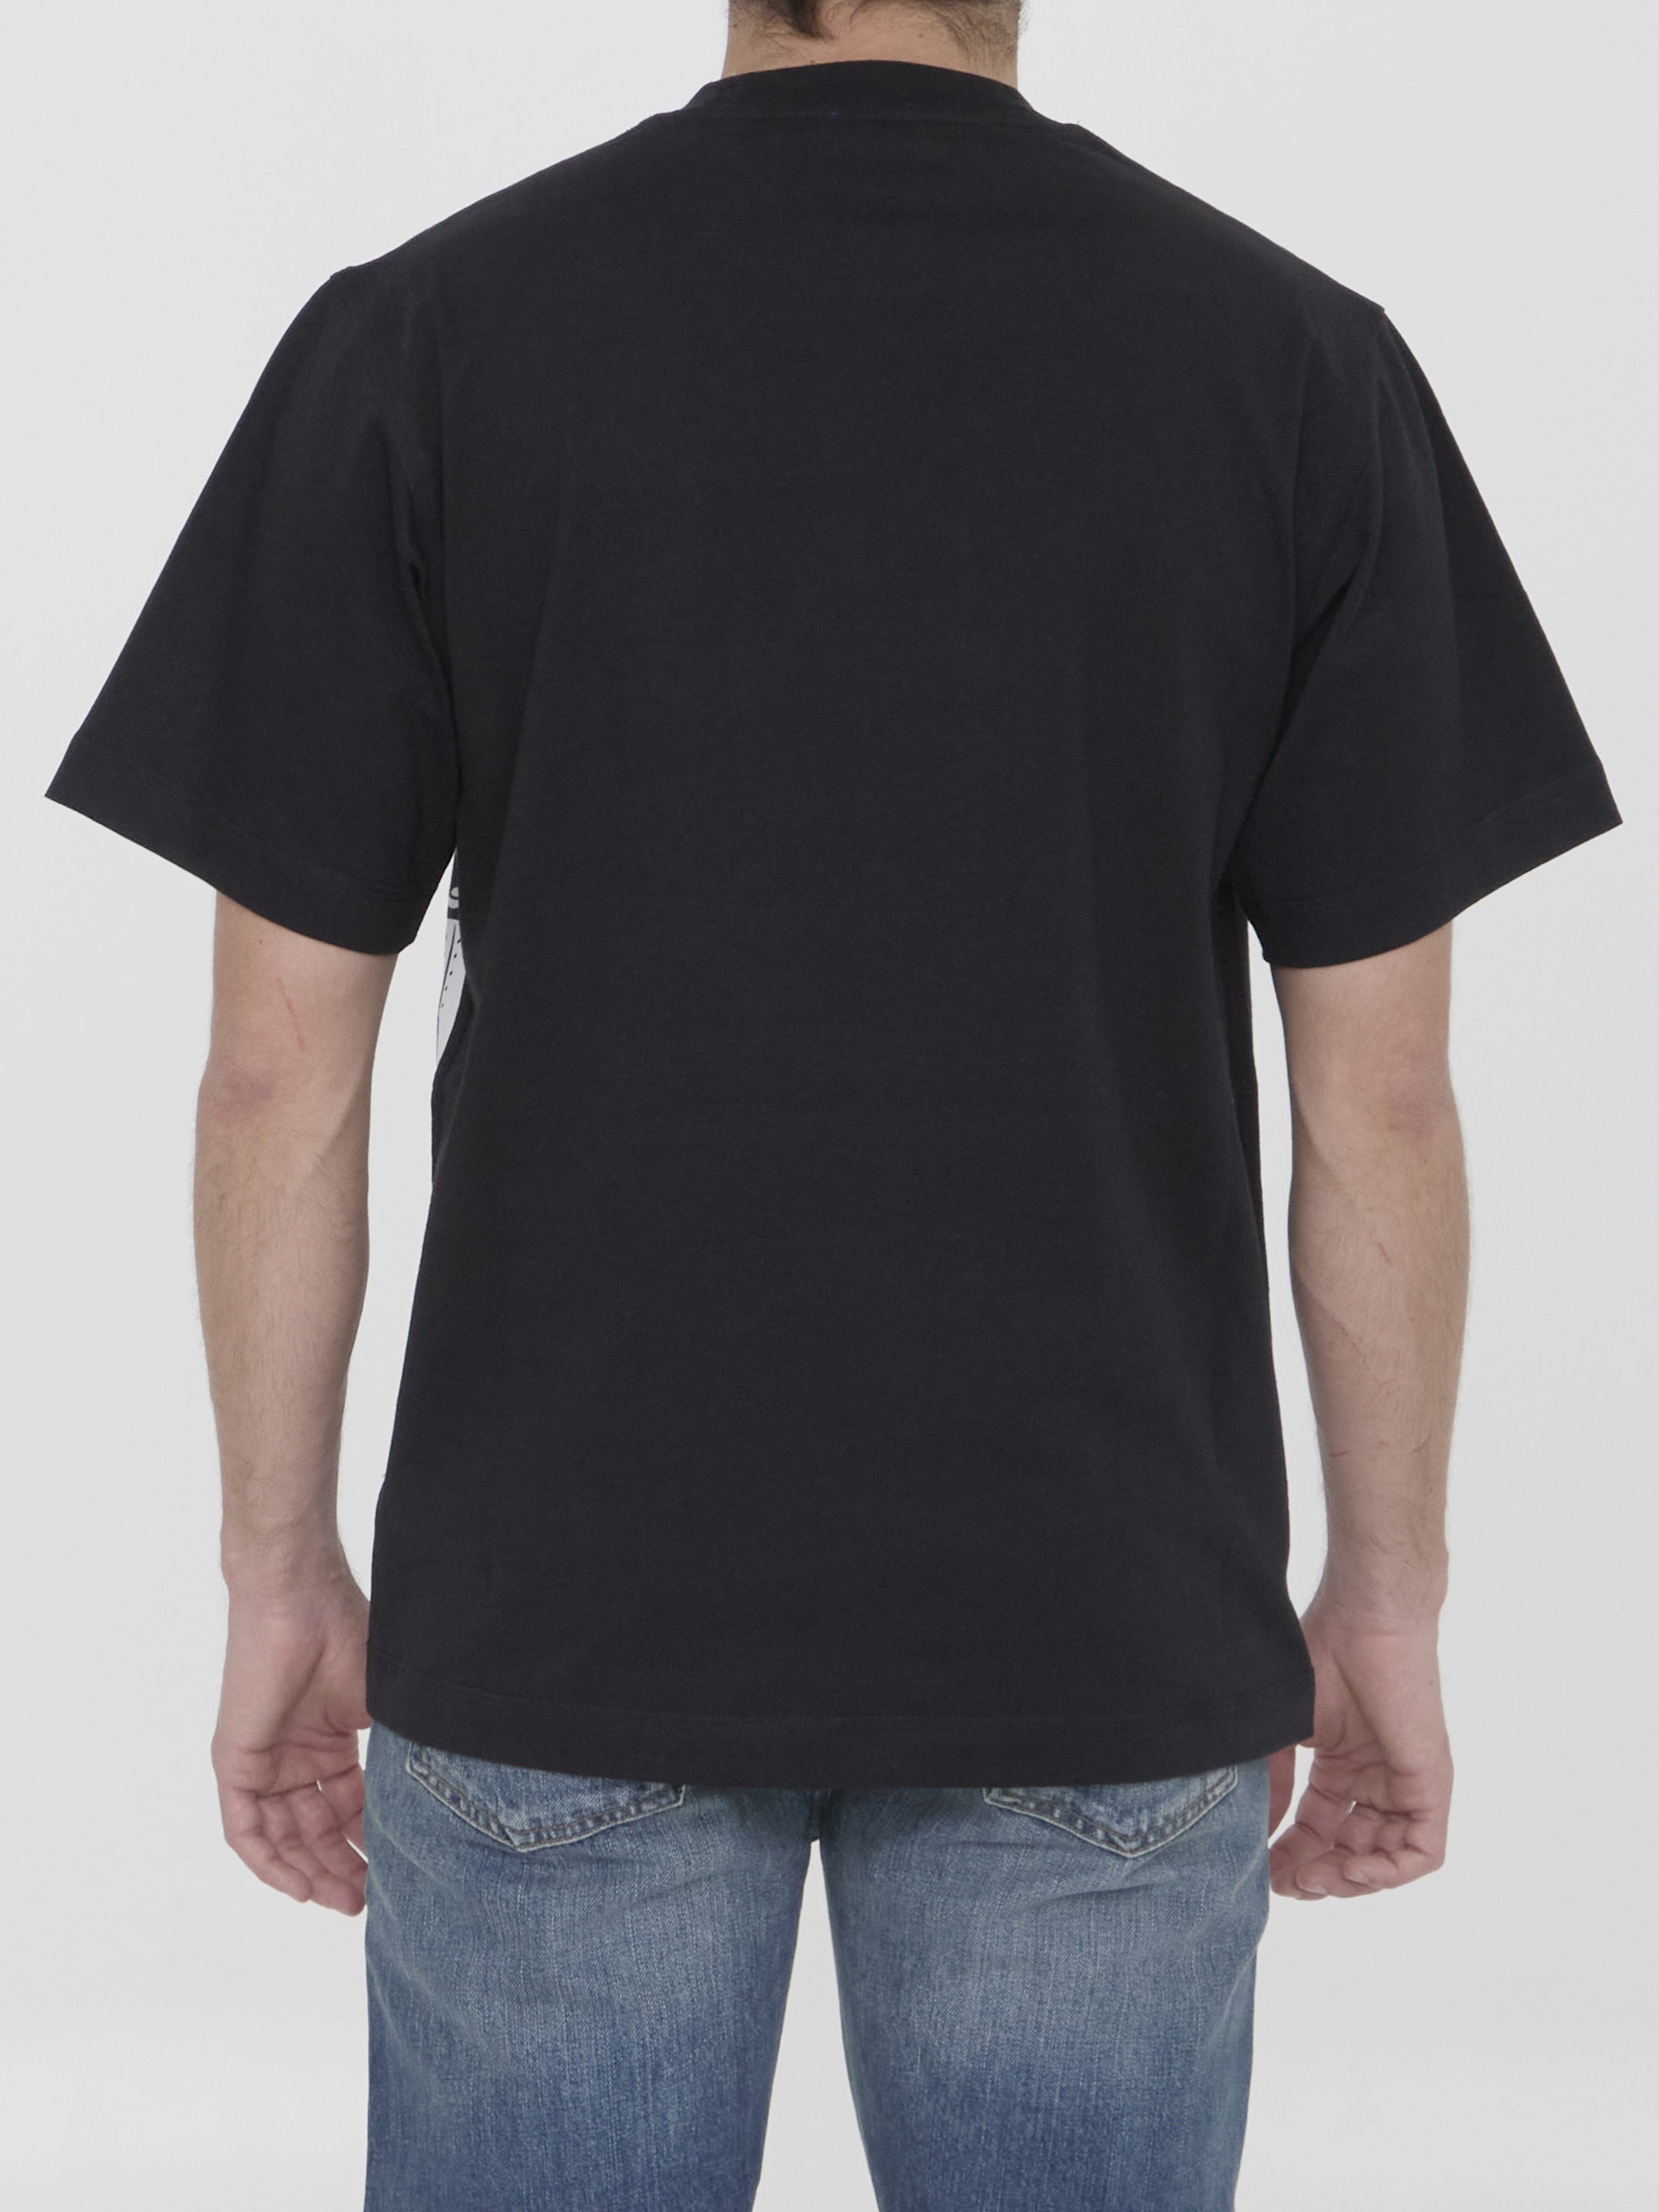 BURBERRY-OUTLET-SALE-EKD-cotton-t-shirt-CLOTHING-ARCHIVE-COLLECTION-4.jpg